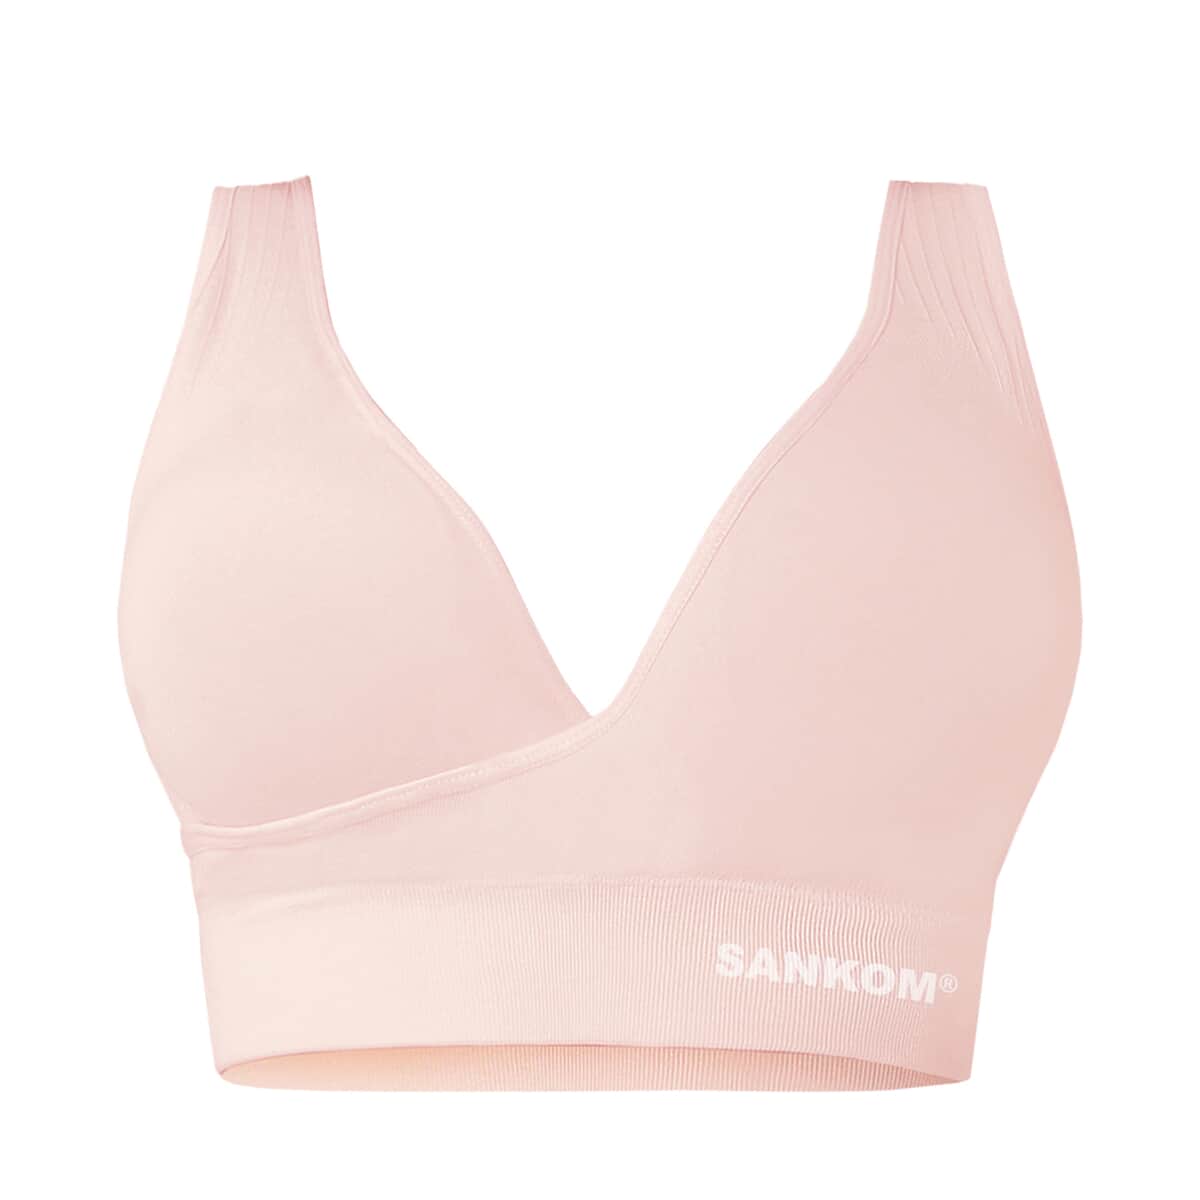 Buy Sankom Patent Classic Support & Posture Bra - (M/L, Light Pink